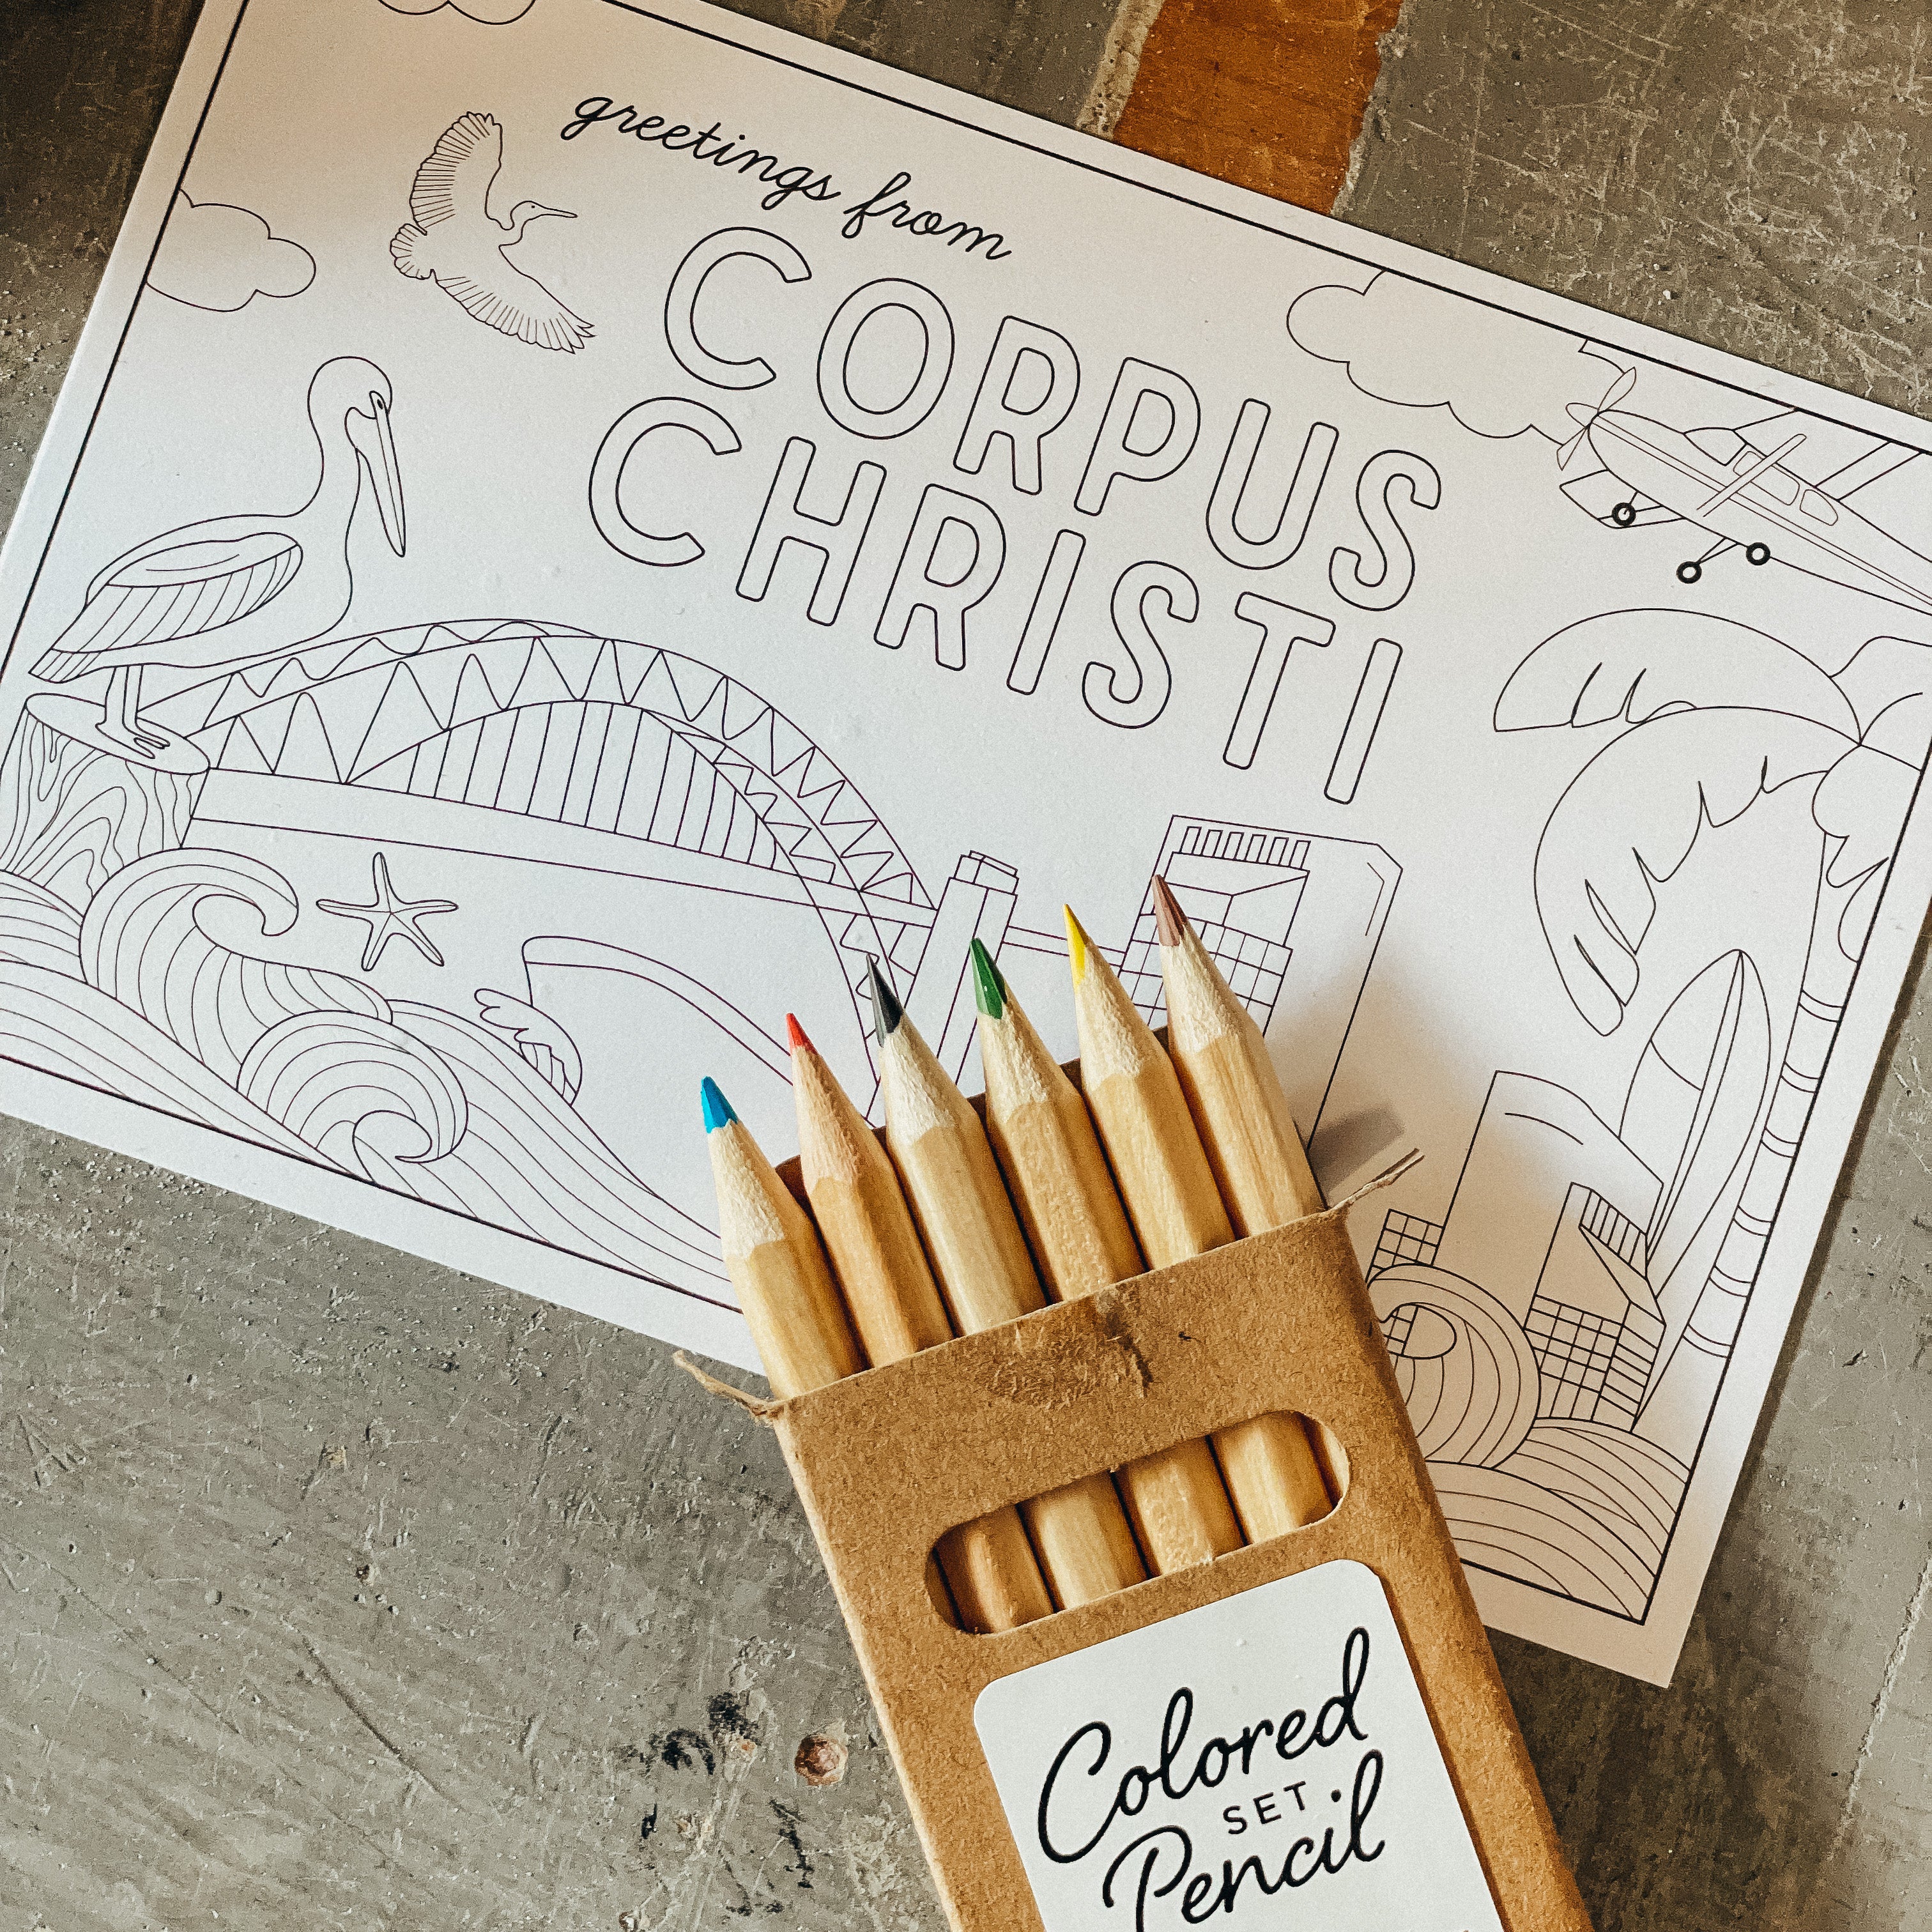 Corpus Christi Coloring Card Set